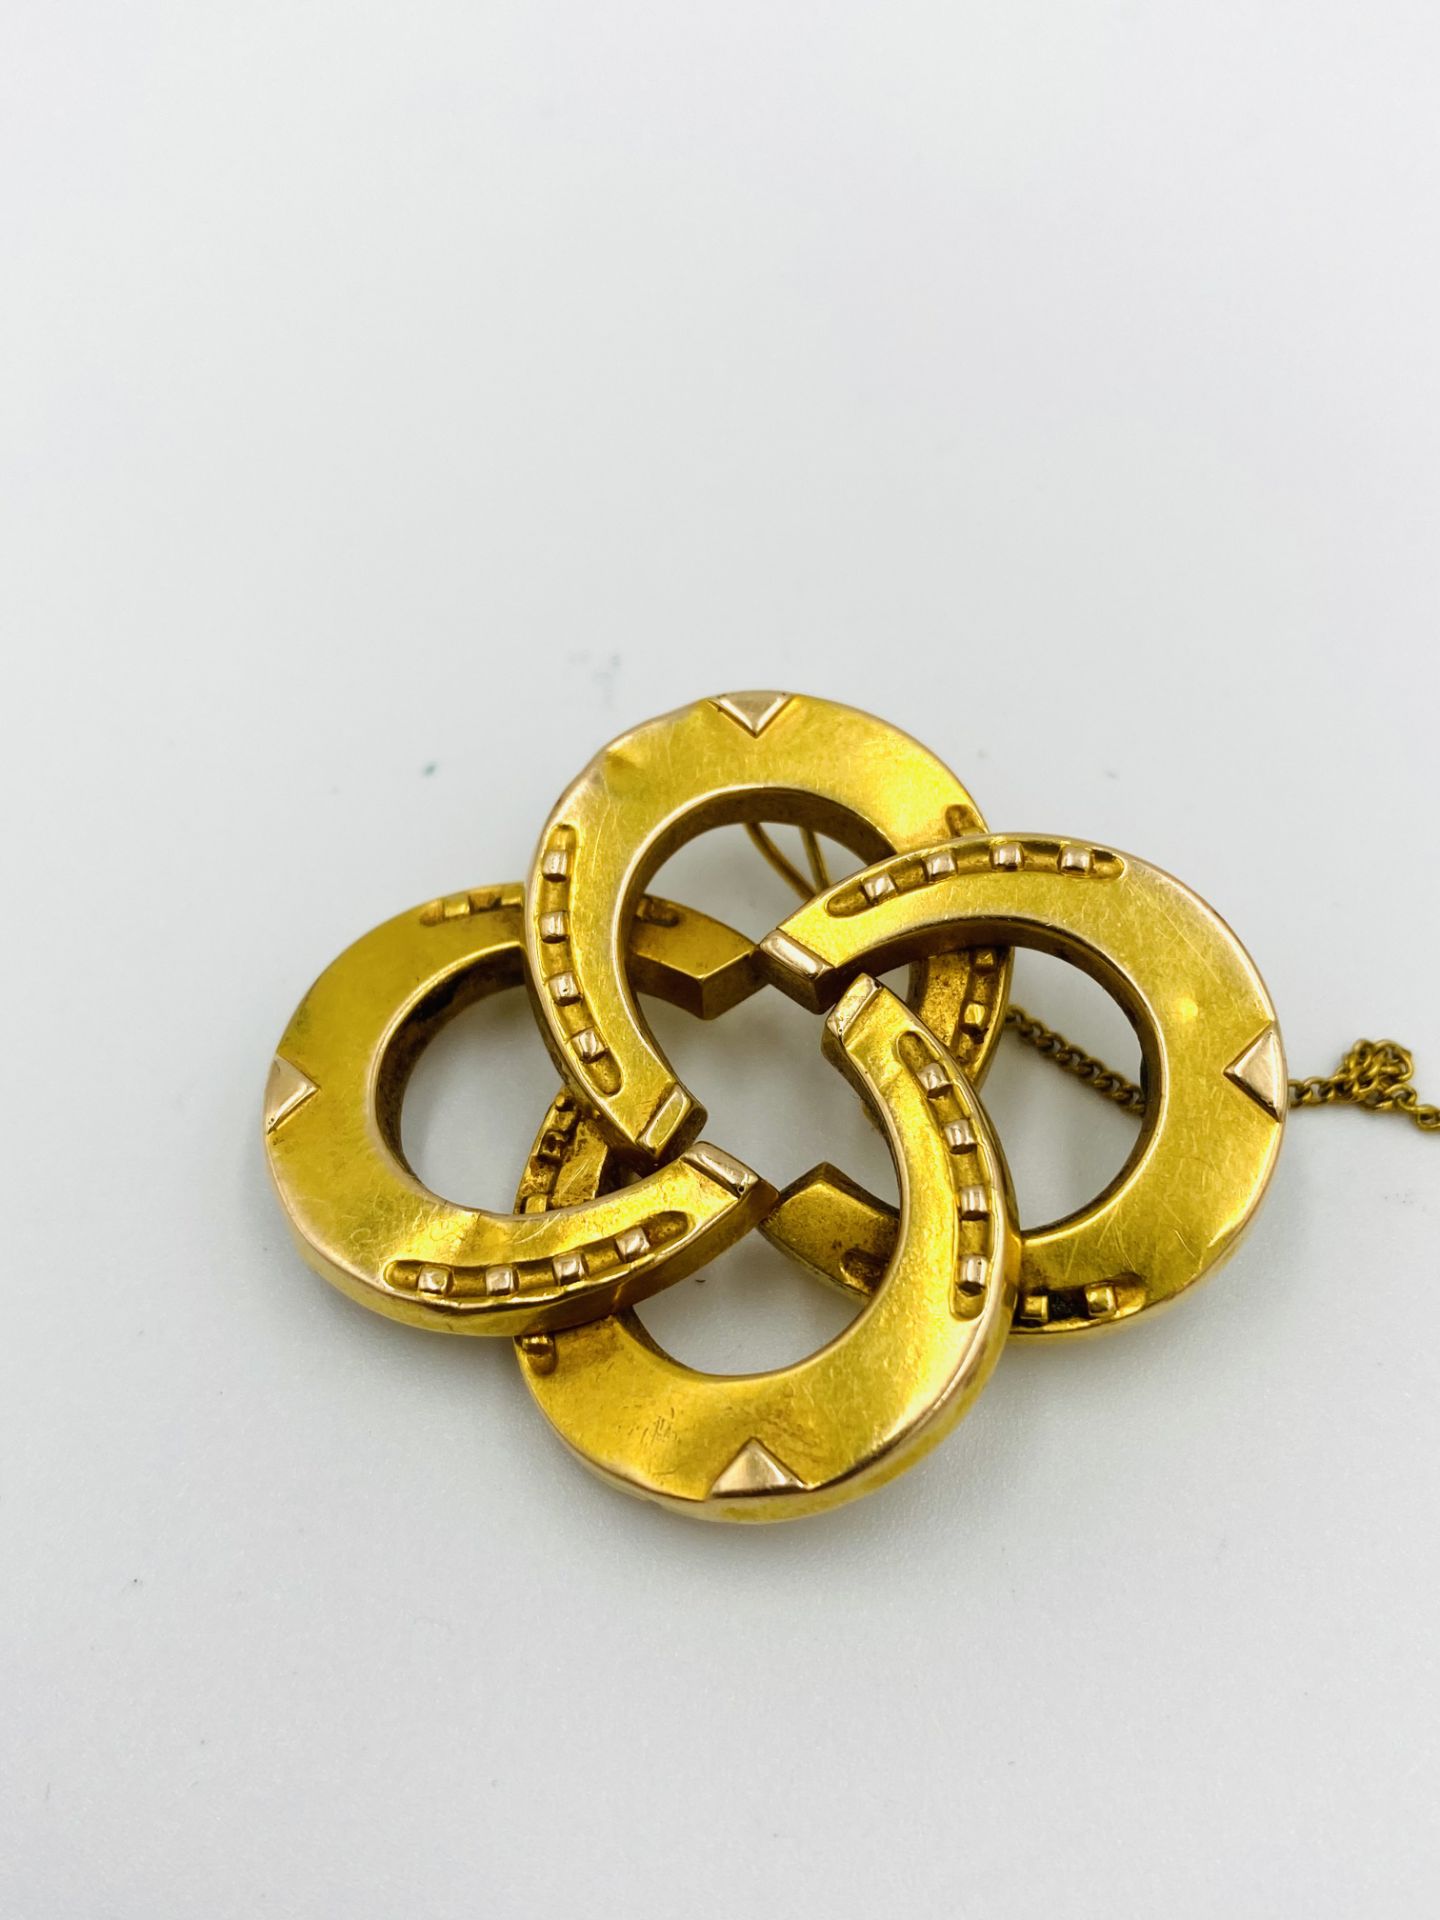 Yellow metal brooch/pendant